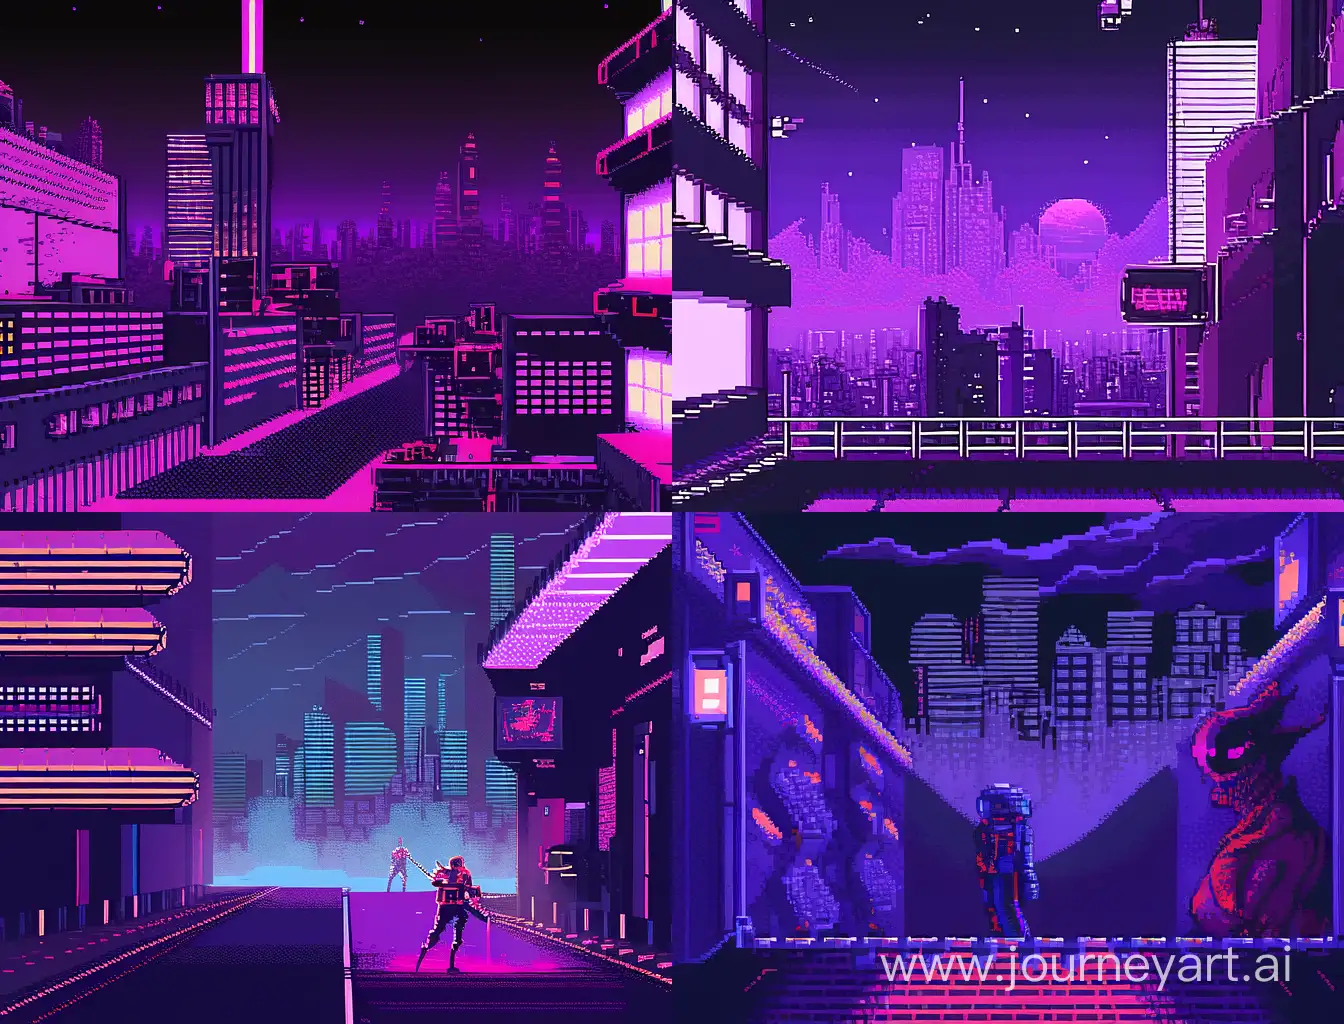 Futuristic-Cyberpunk-Cityscape-in-Vibrant-Purple-and-Pink-Pixel-Art